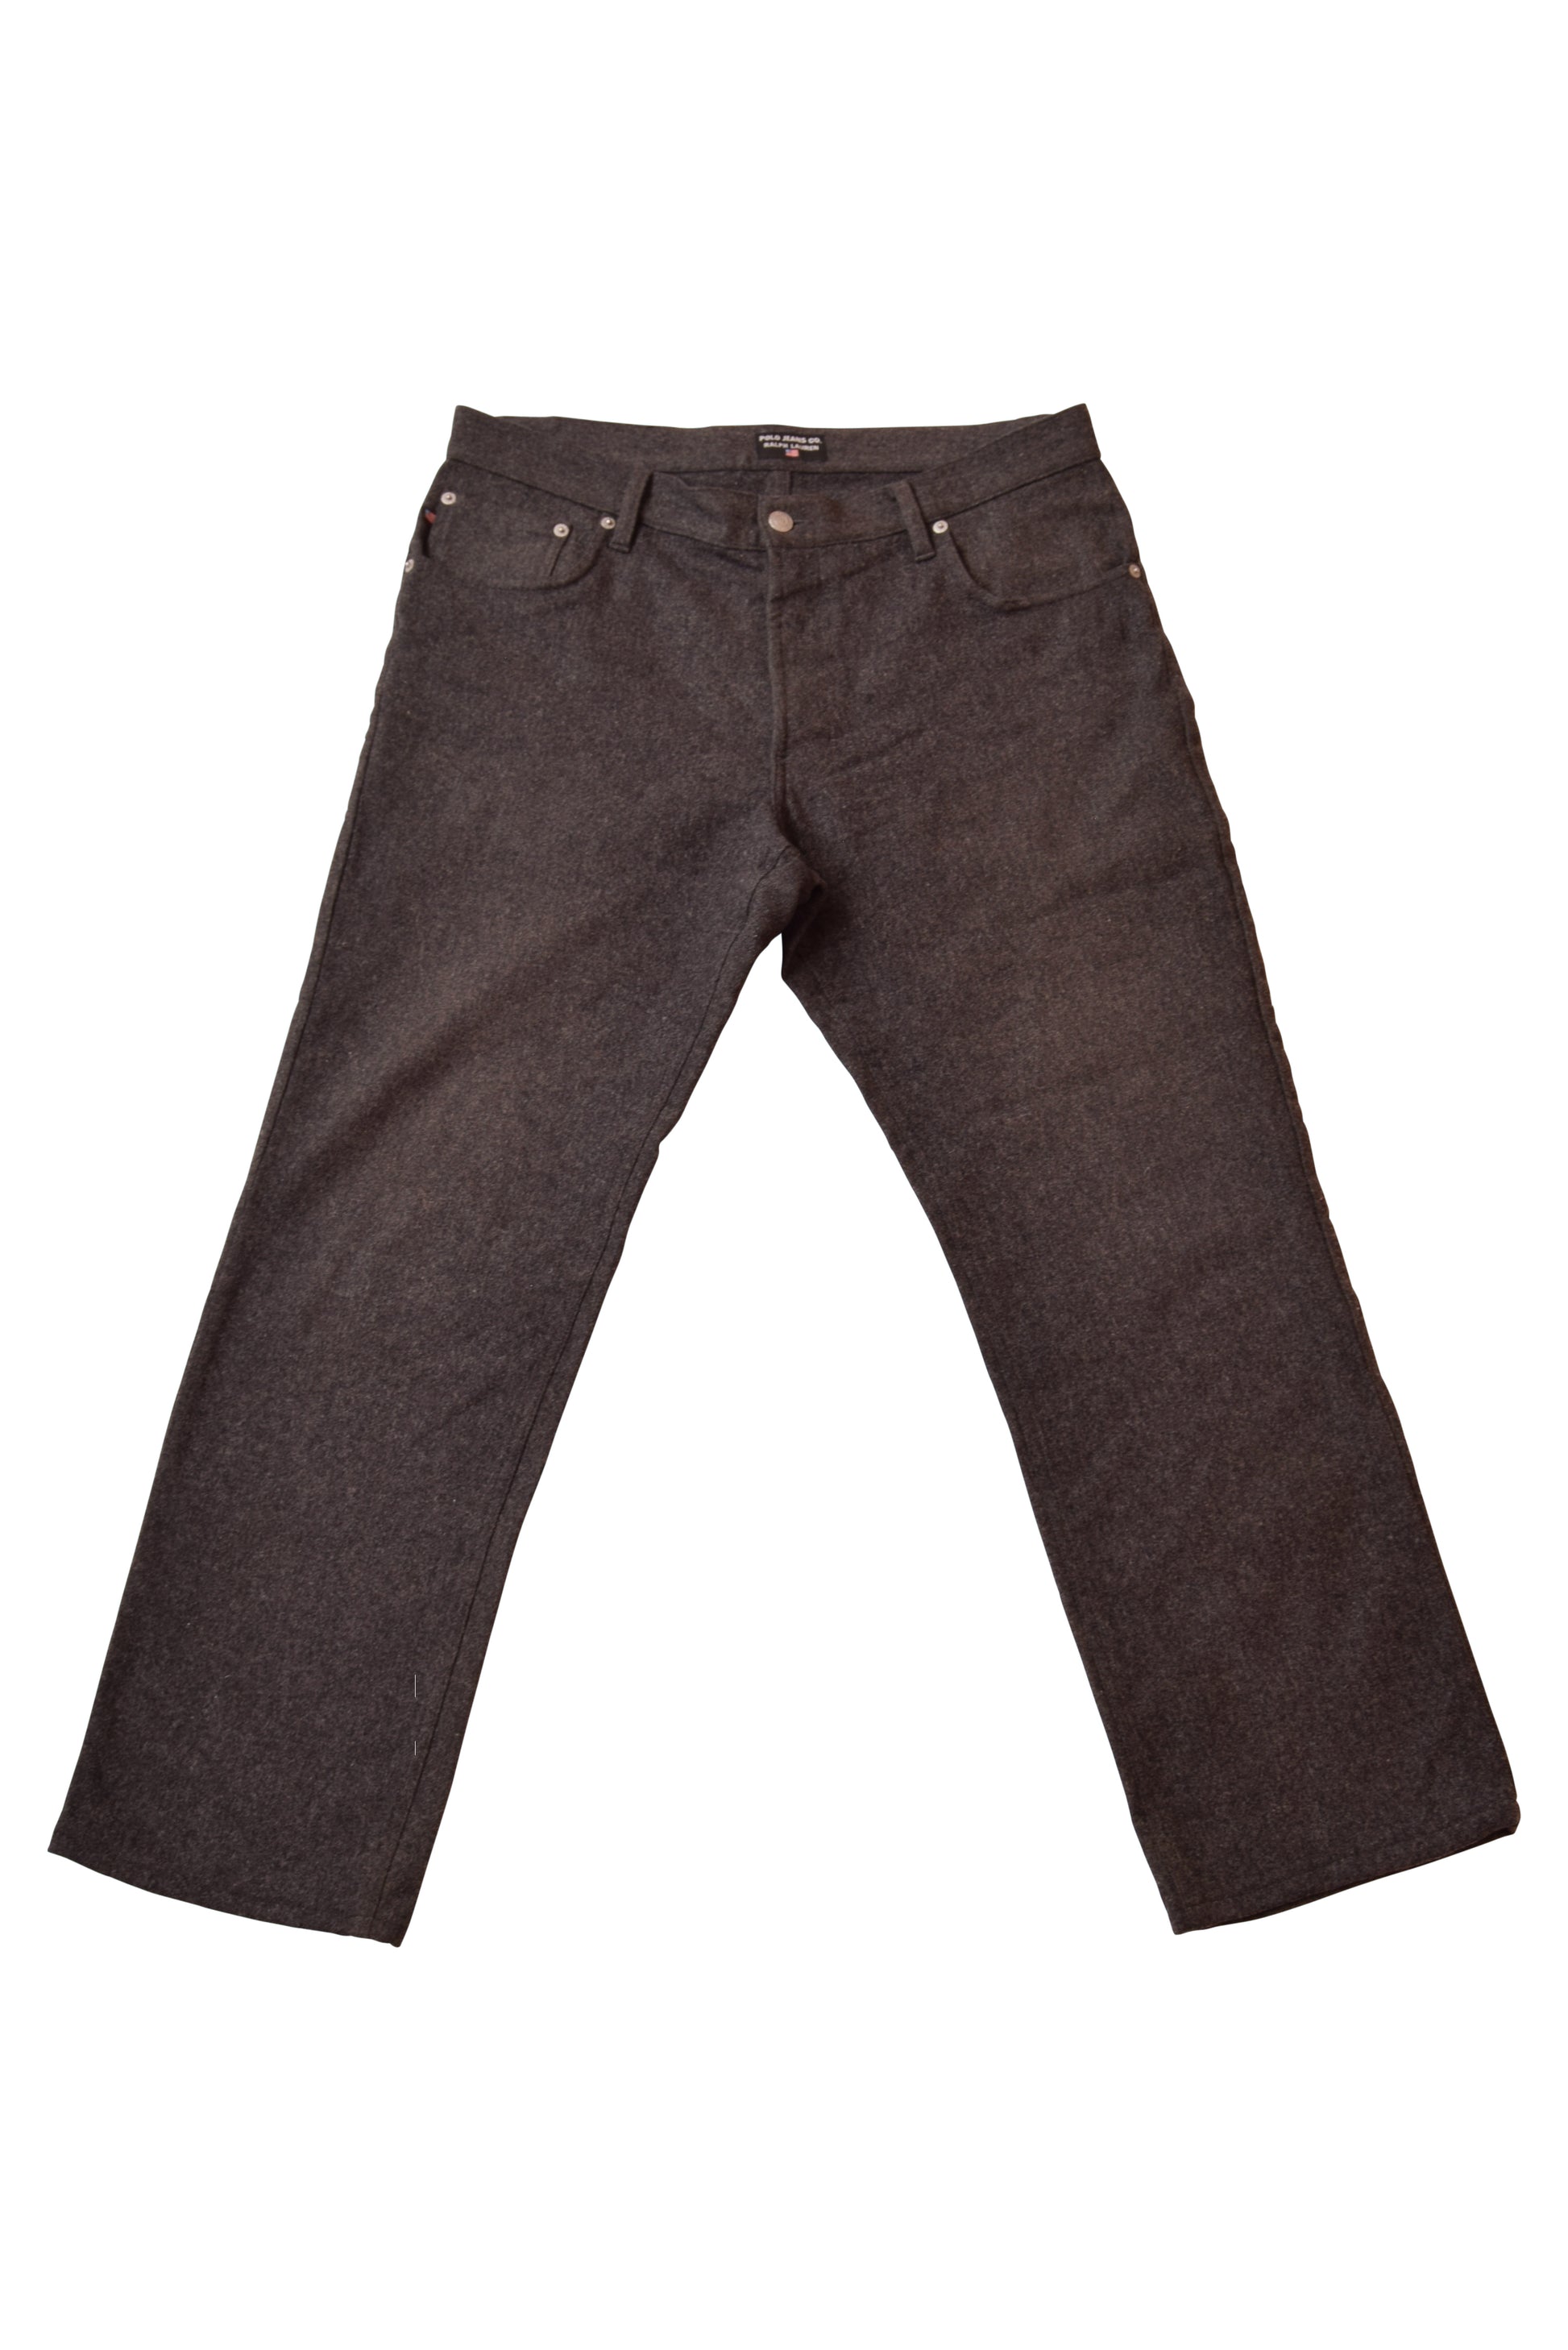 Vintage Ralph Lauren Polo Jeans Co. Trousers 100% Wool Size 34"/32"